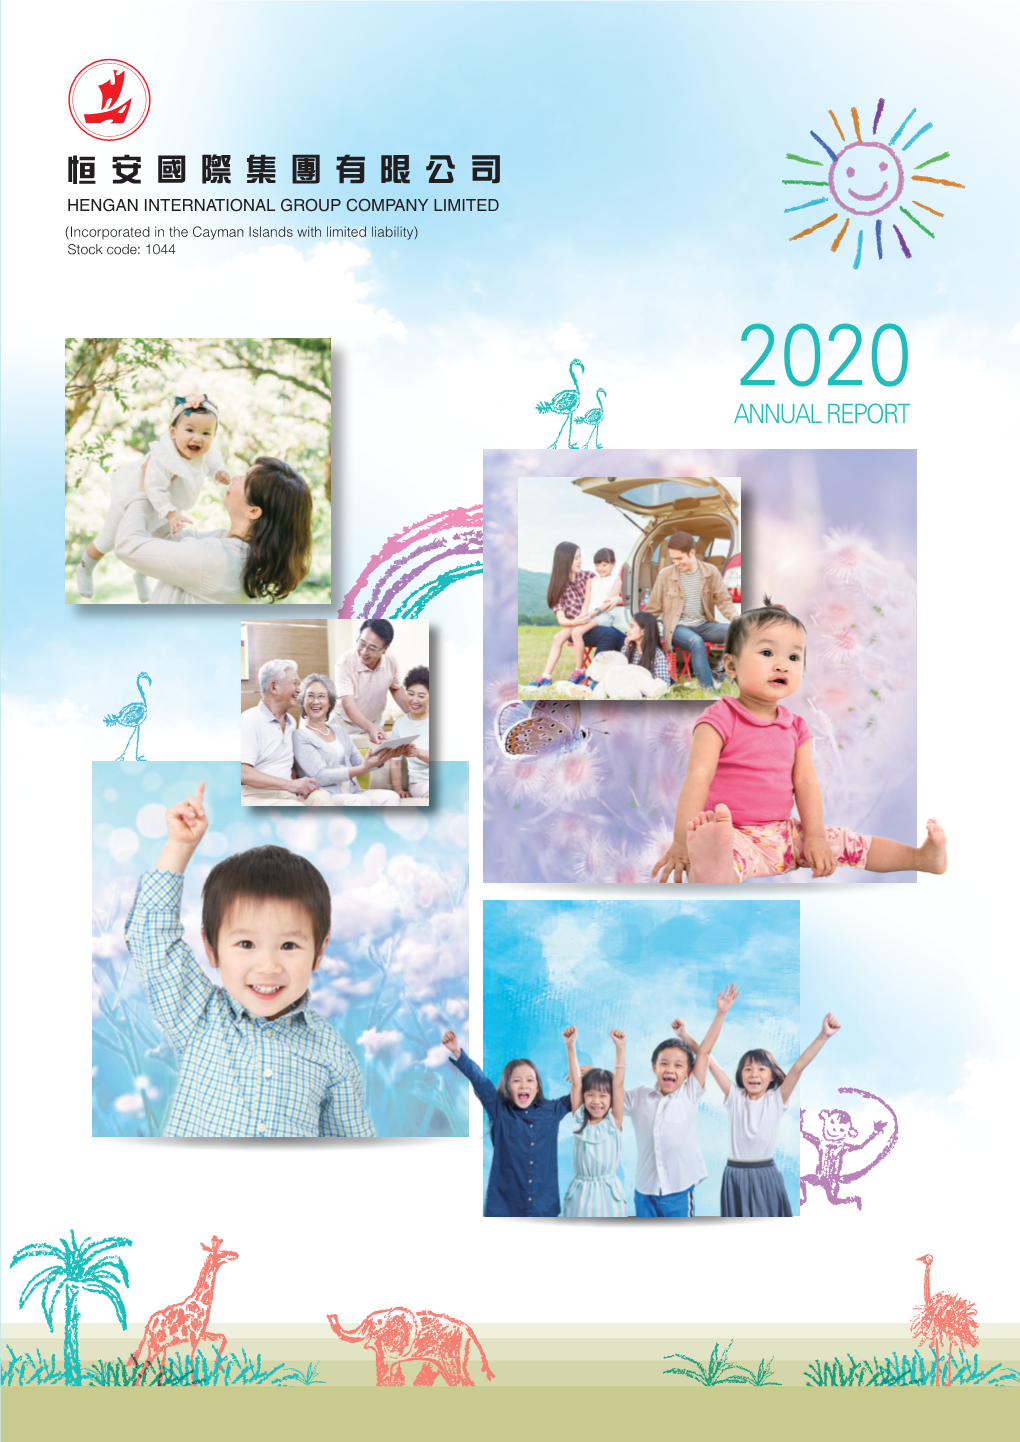 Annual Report 2020 Corporate Mission